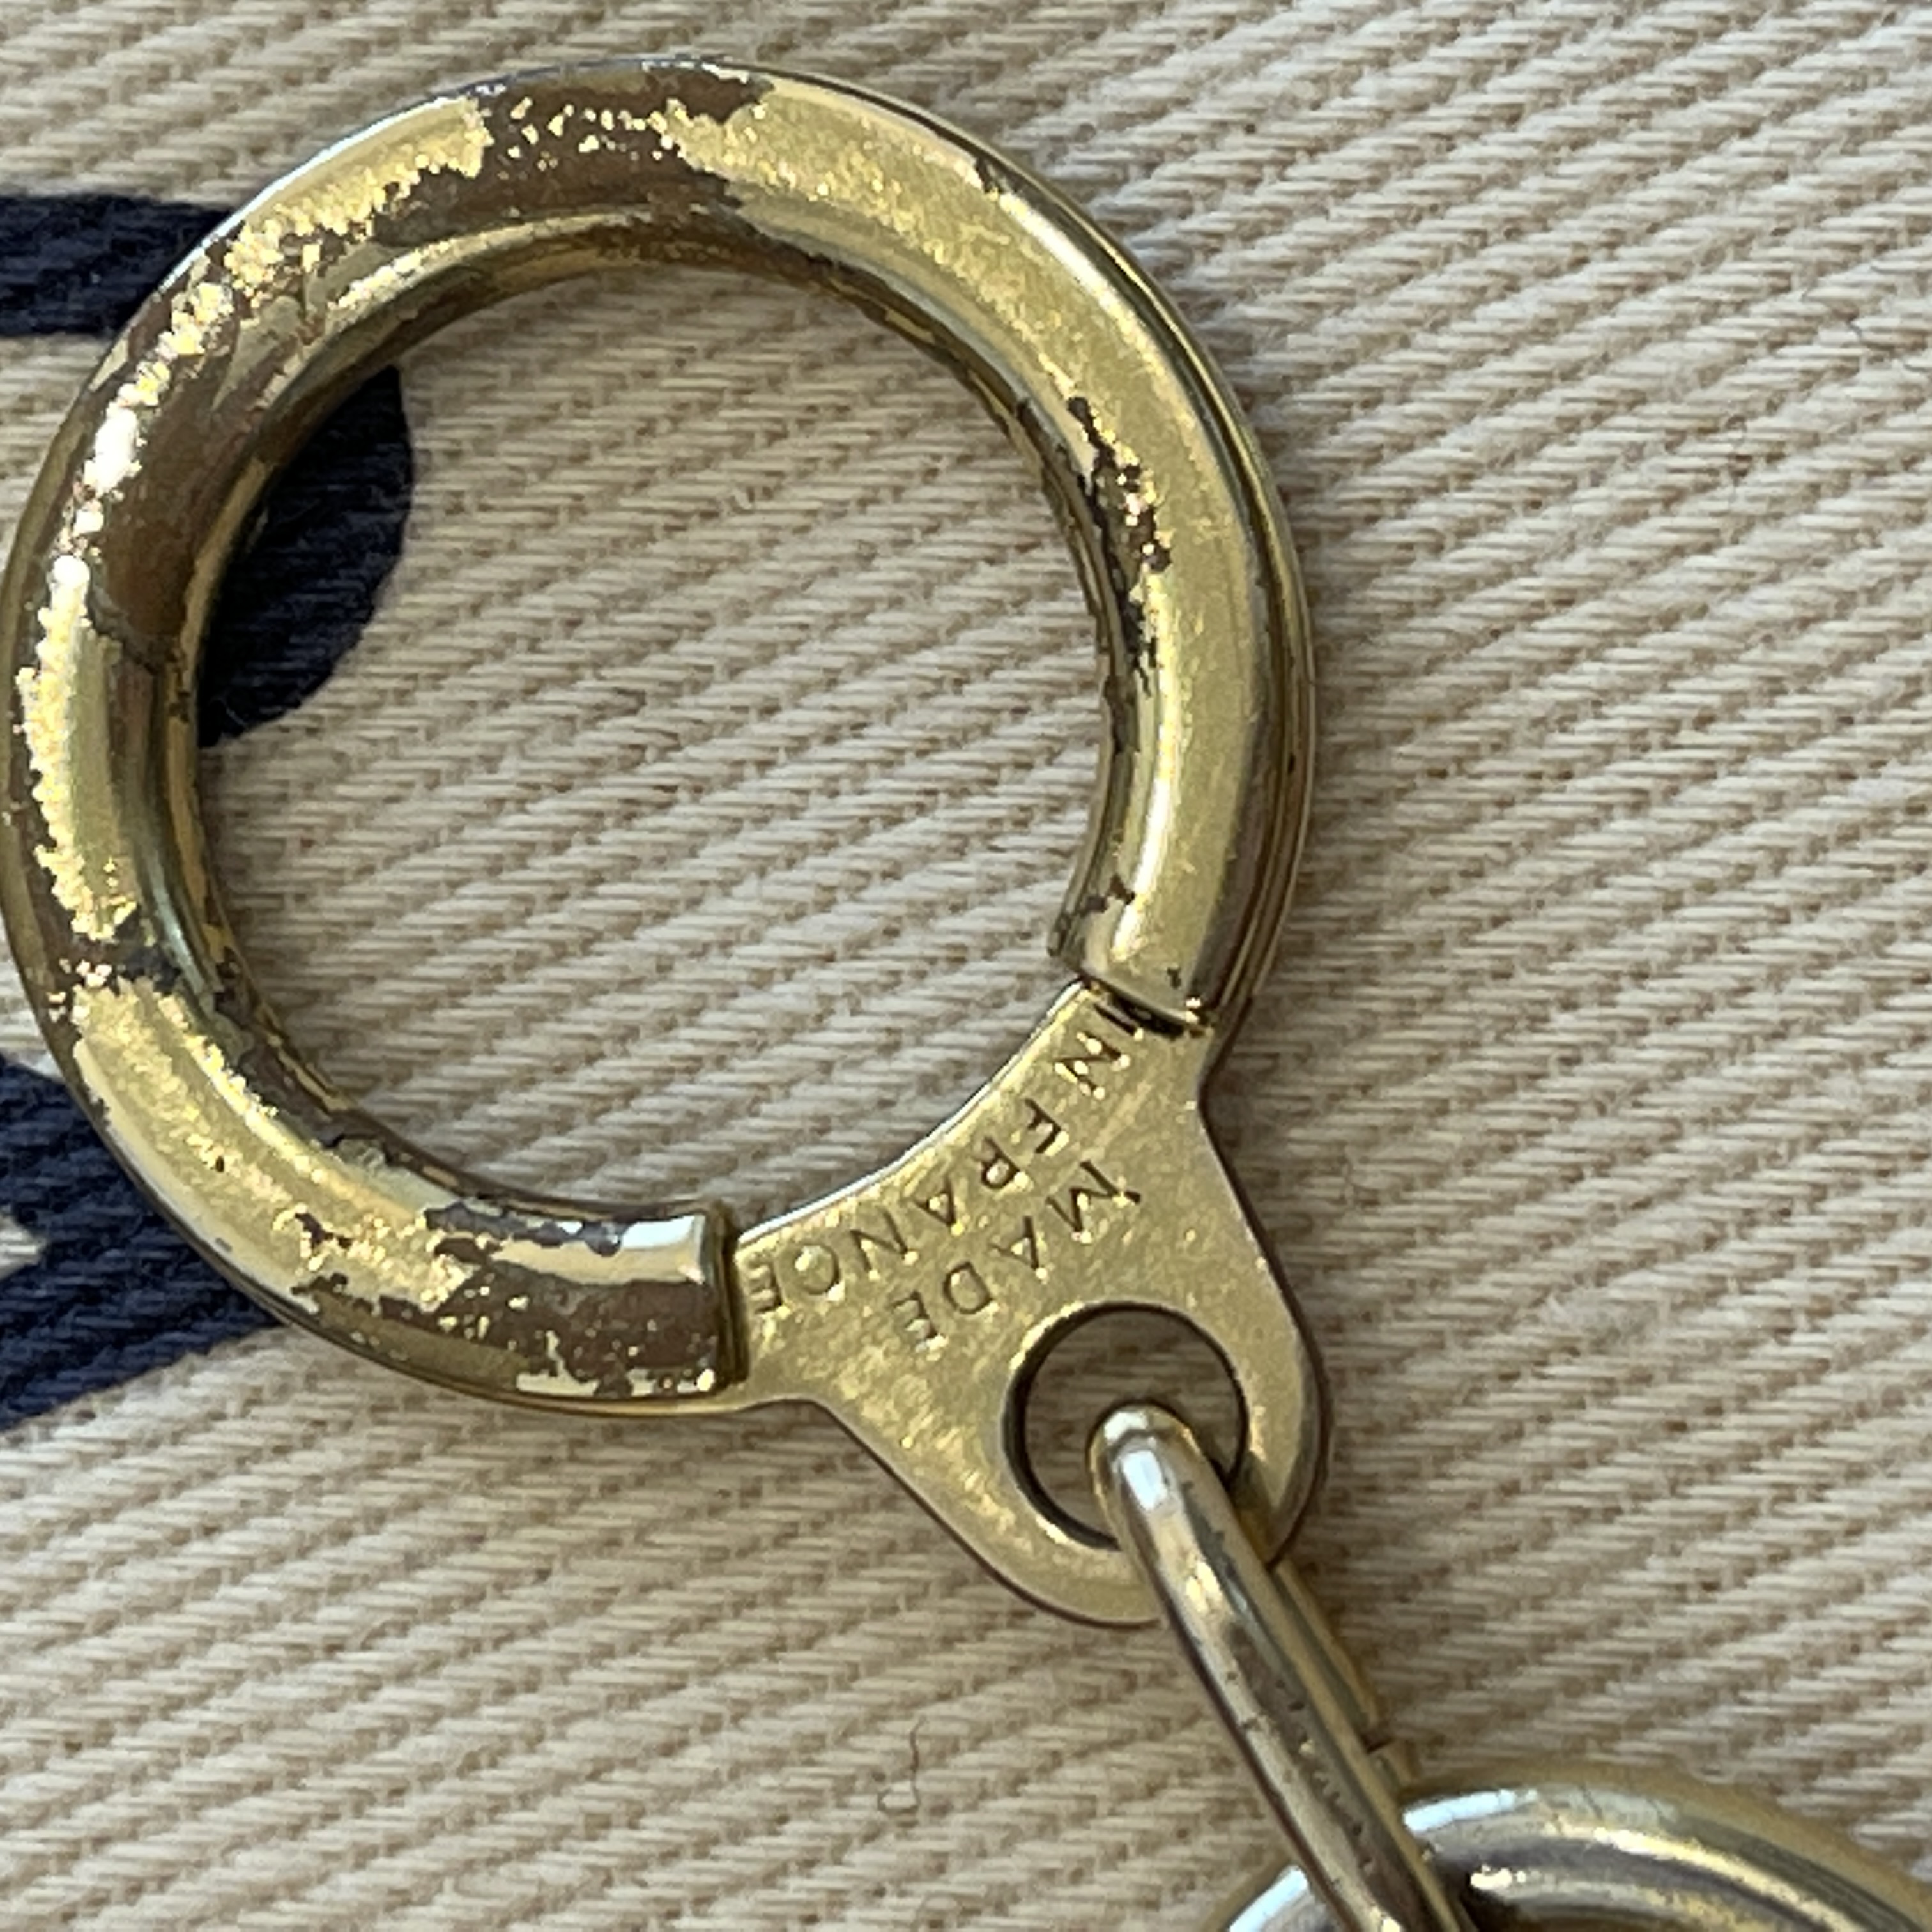 Louis Vuitton Porte Kure Monogram Check Key Ring Key Holder Bag charm